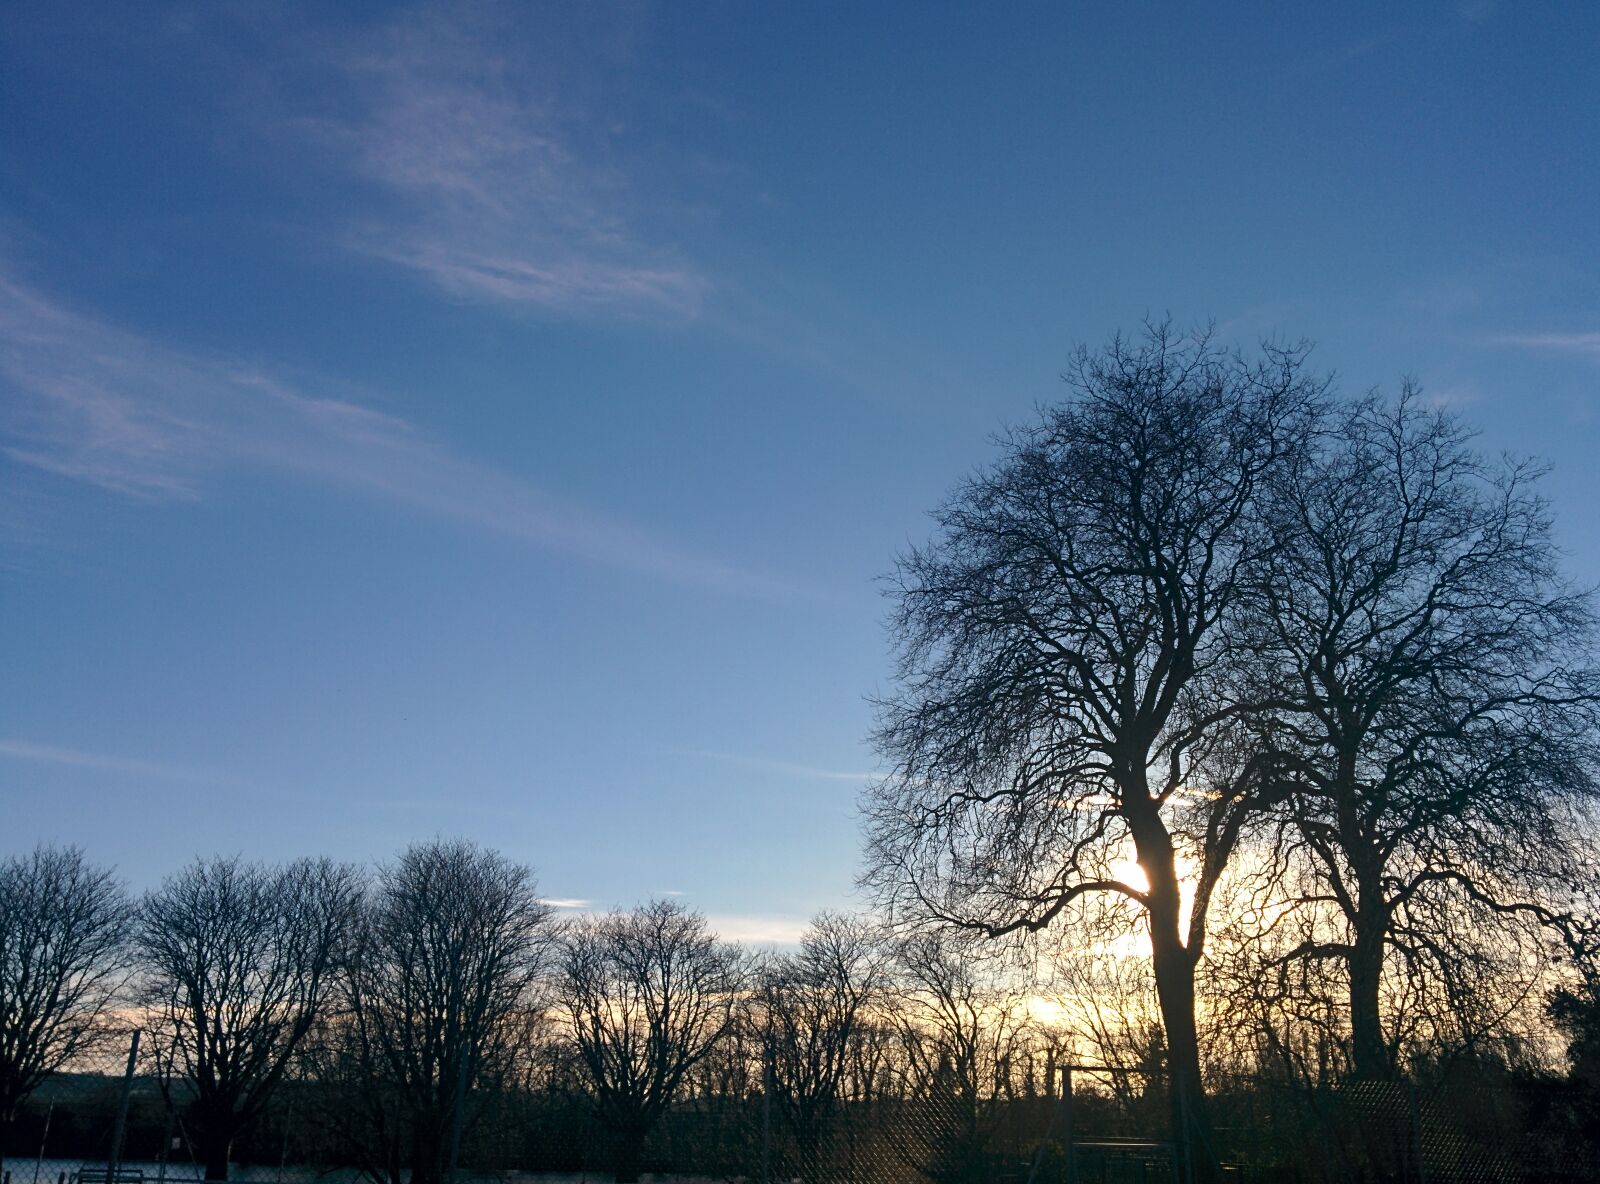 LG Nexus 5 sample photo. Tree, sky, nature photography